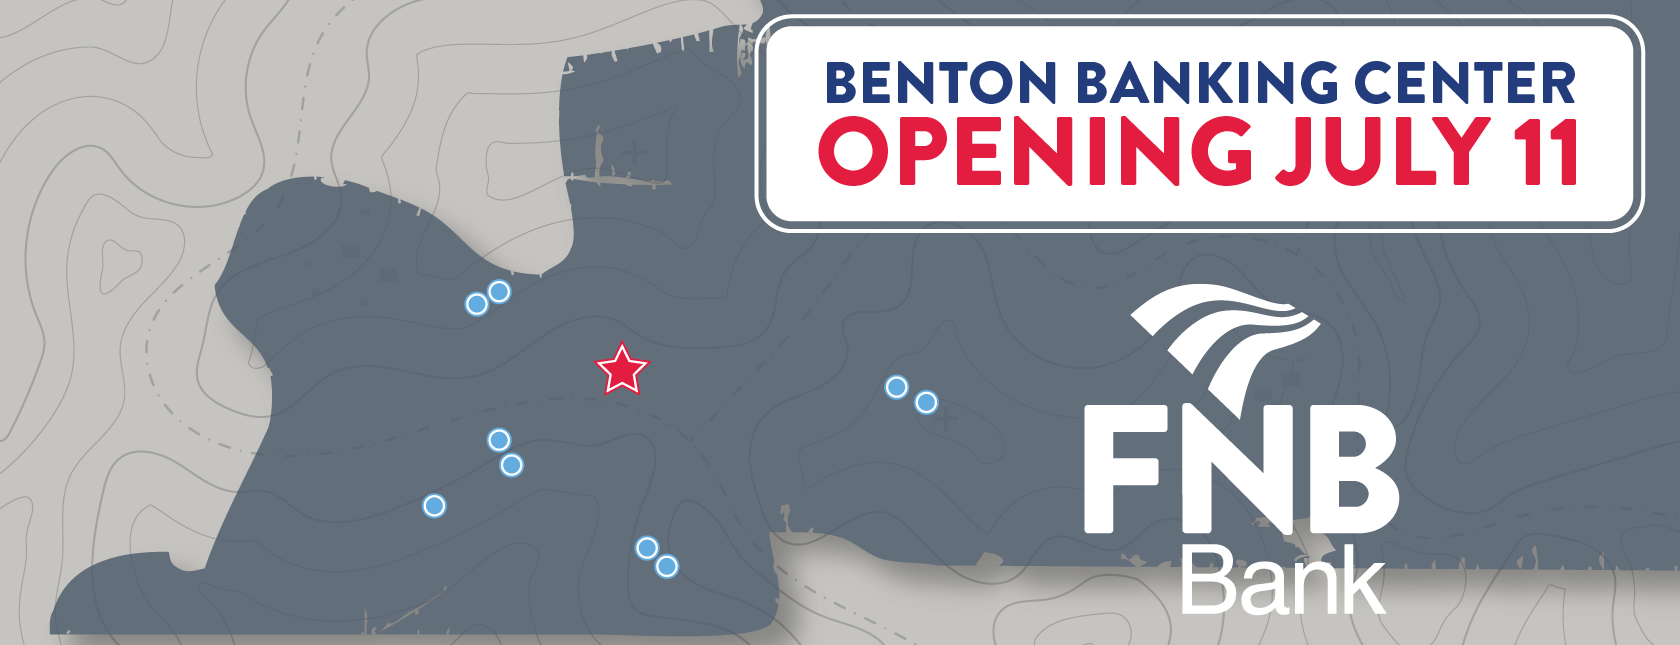 fnb_benton_office_opening_soon